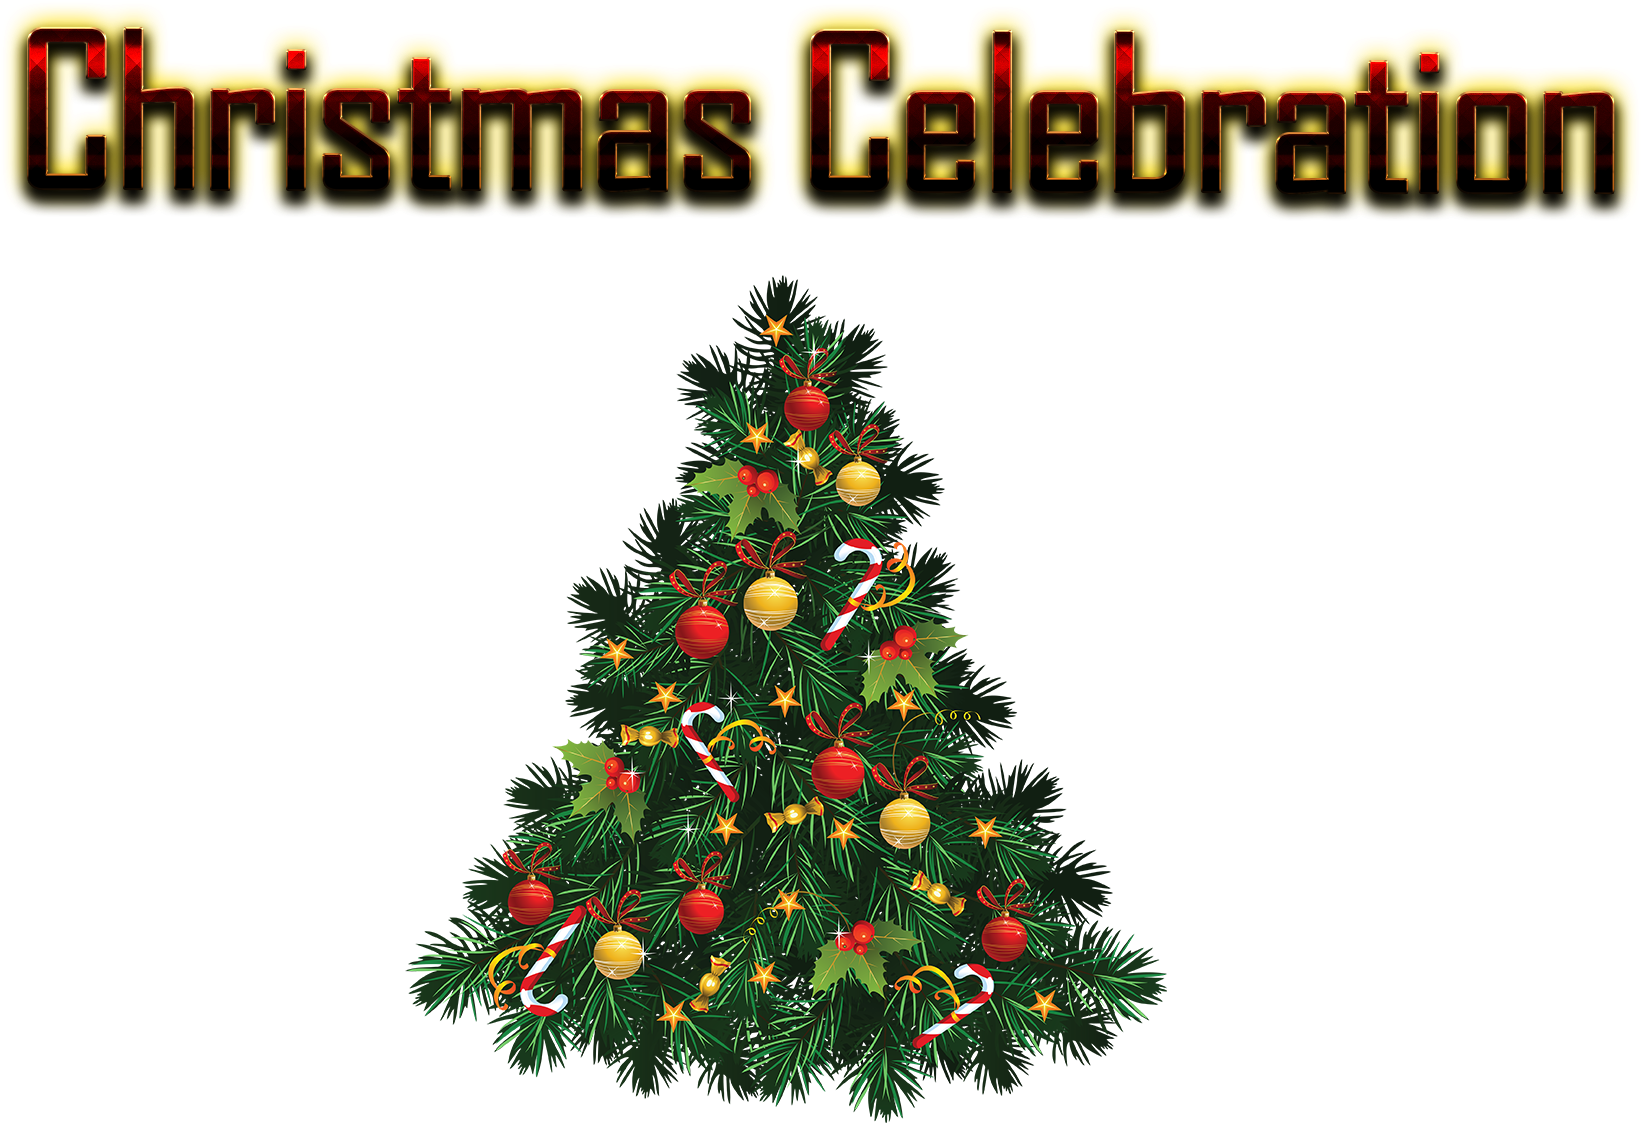 Festive Christmas Tree Celebration PNG image